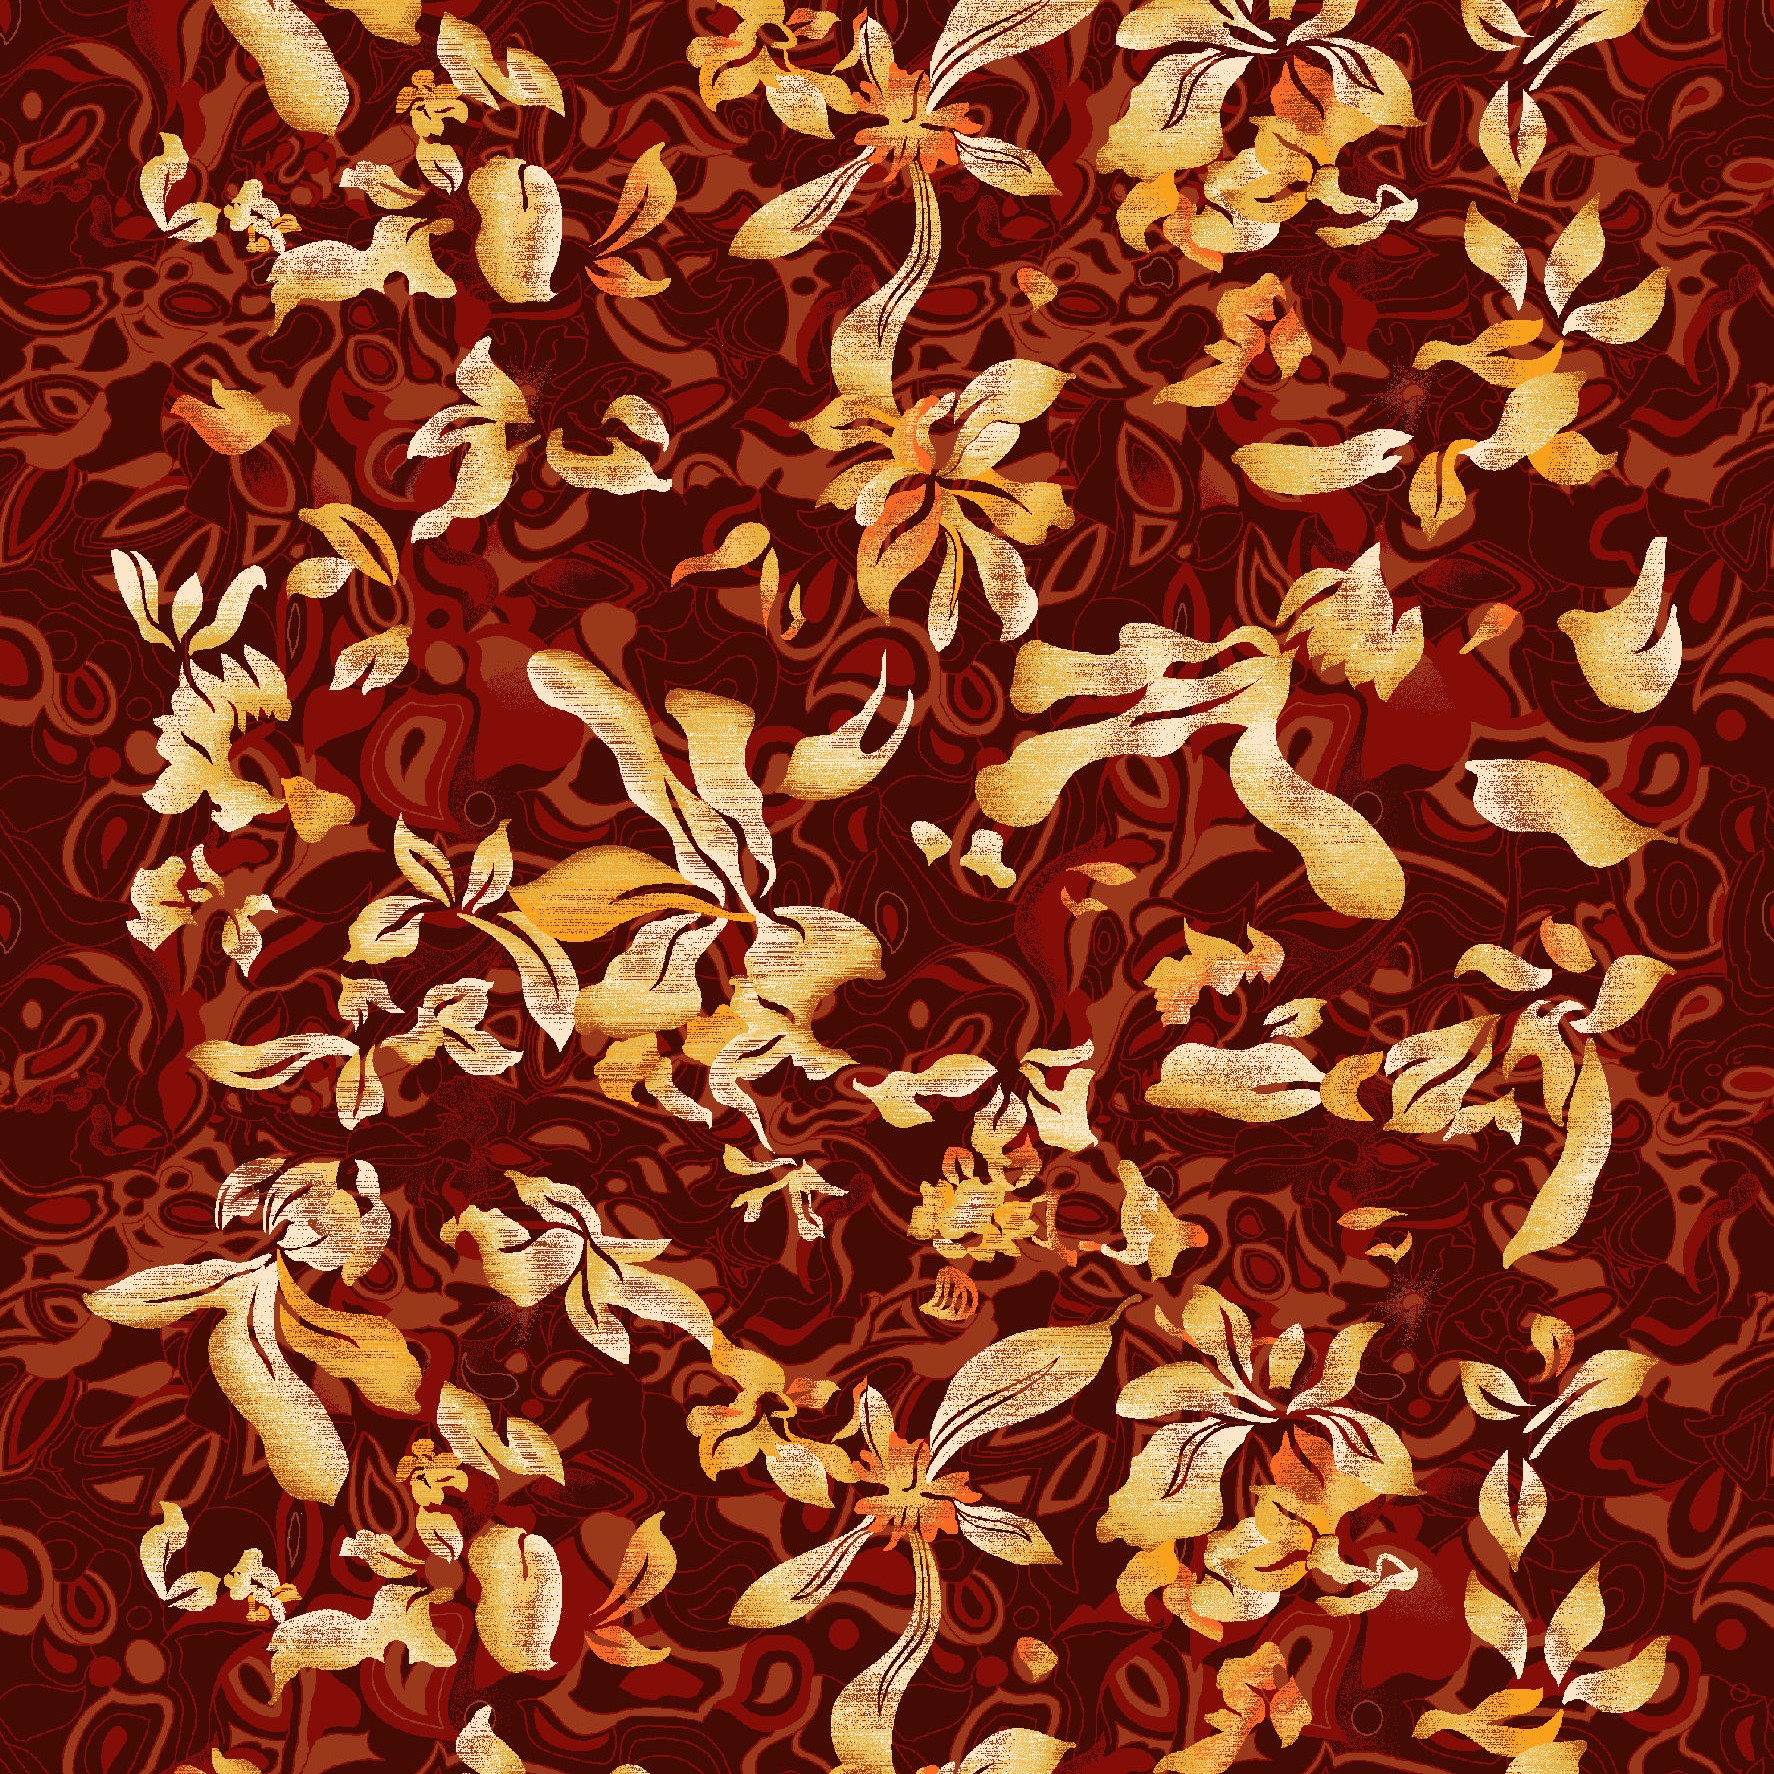 Nylon Tufted Printed Carpet Tiles